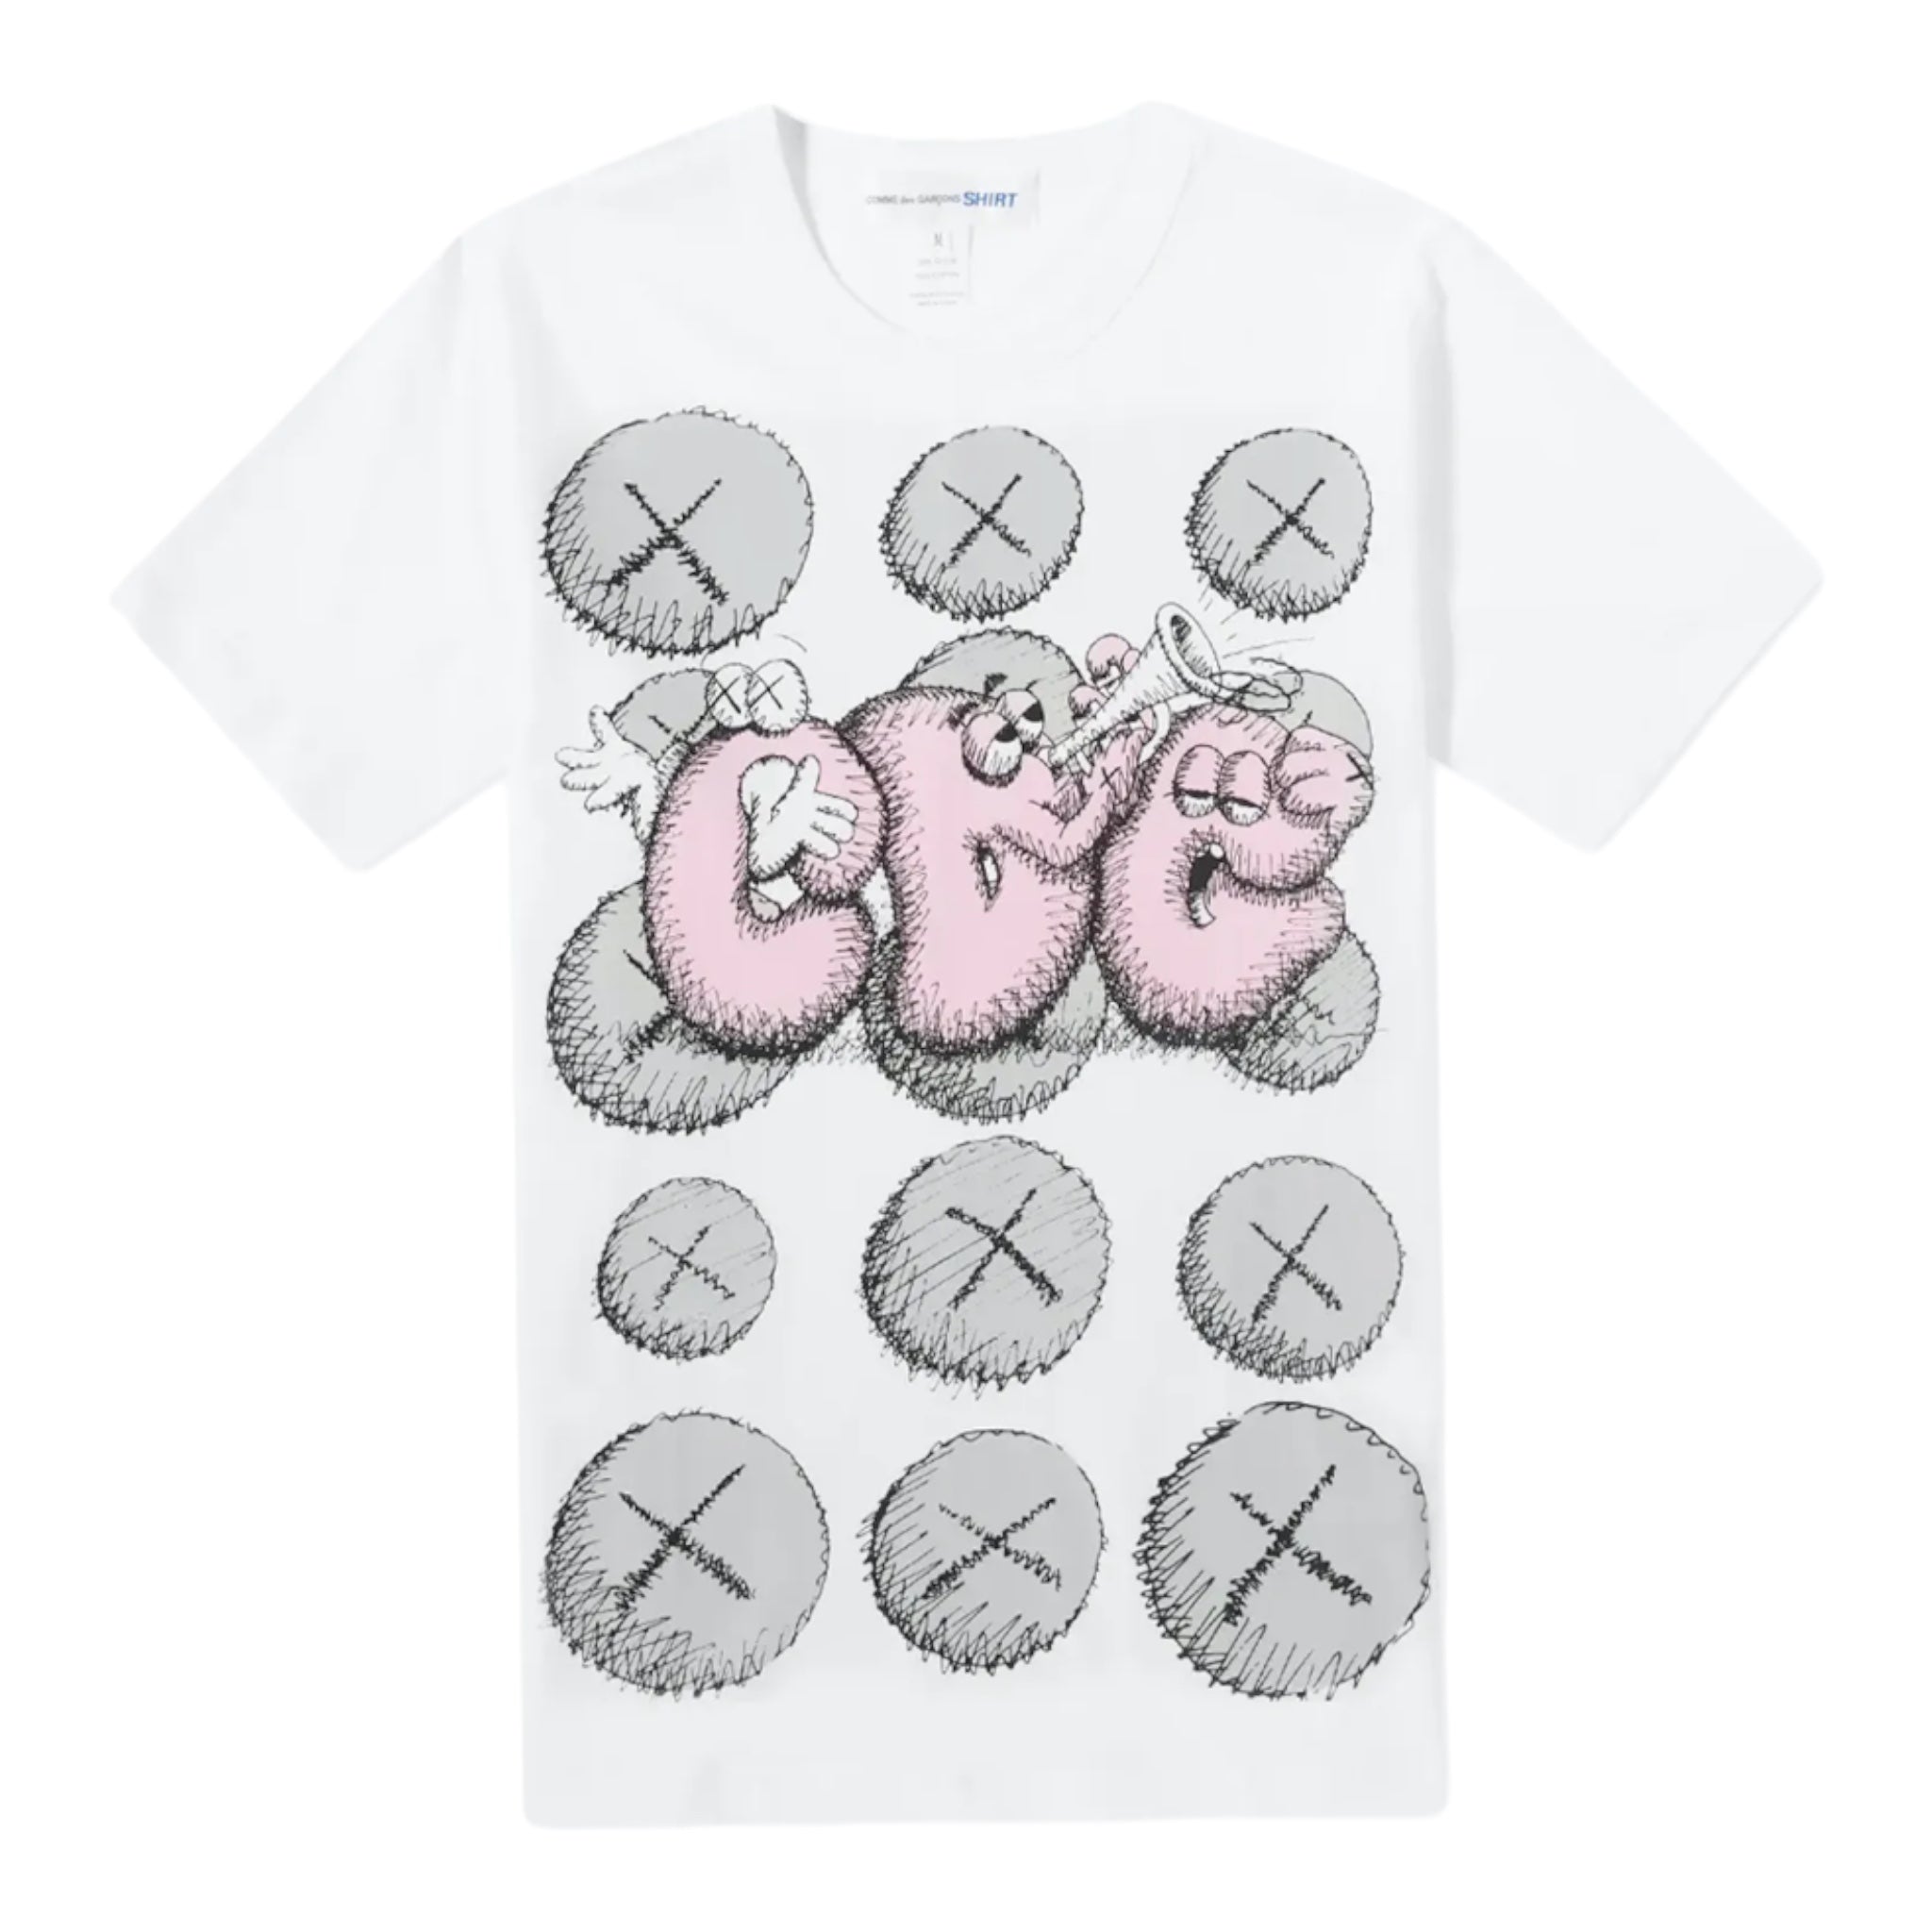 Comme des Garcons Shirt x KAWS Shirt - White, Pink & Grey Graphic Shirt